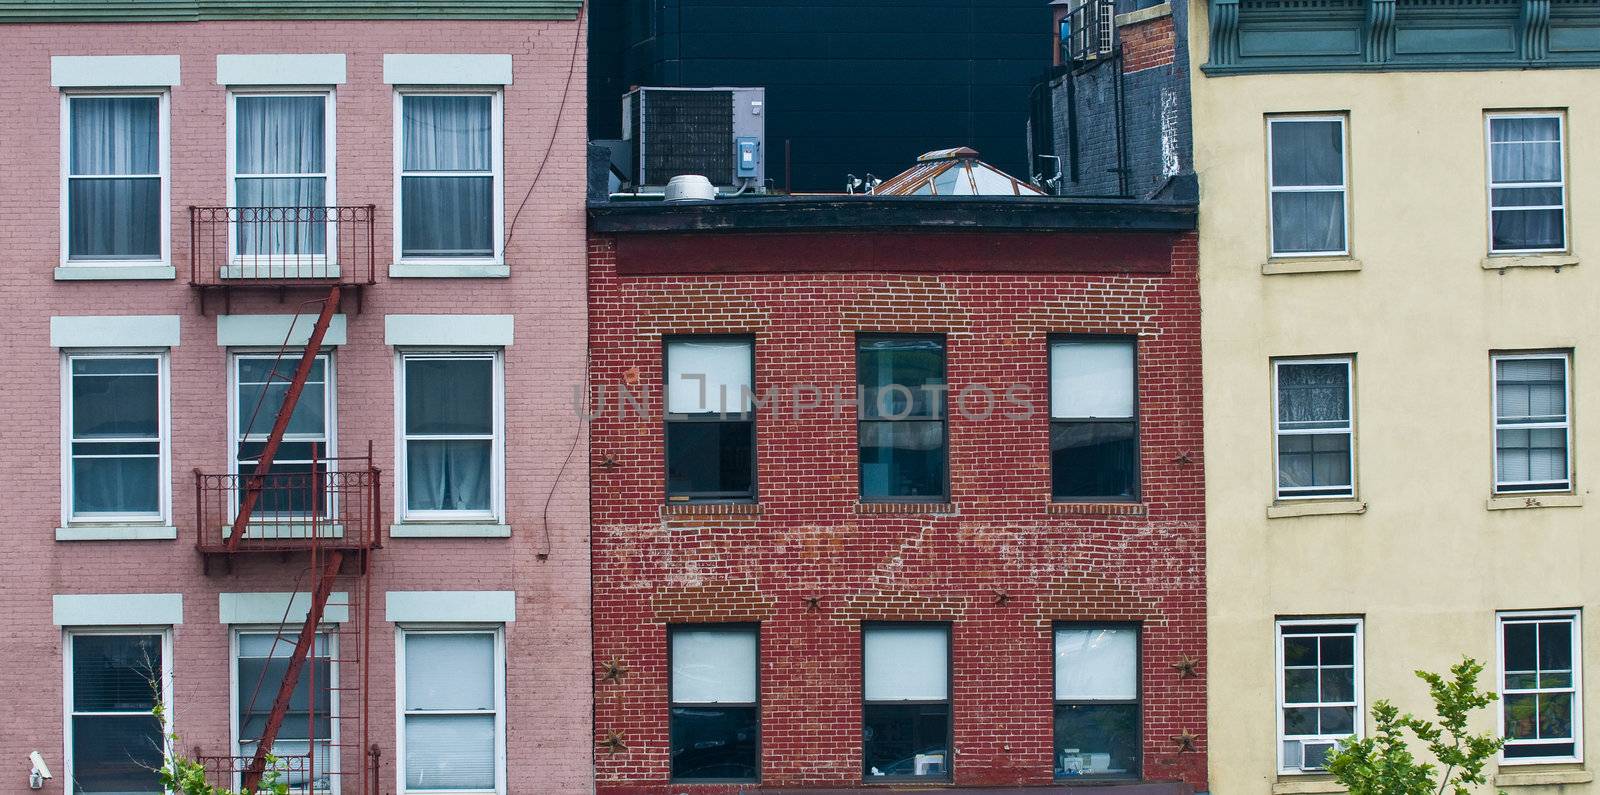 Building in New York by kobby_dagan